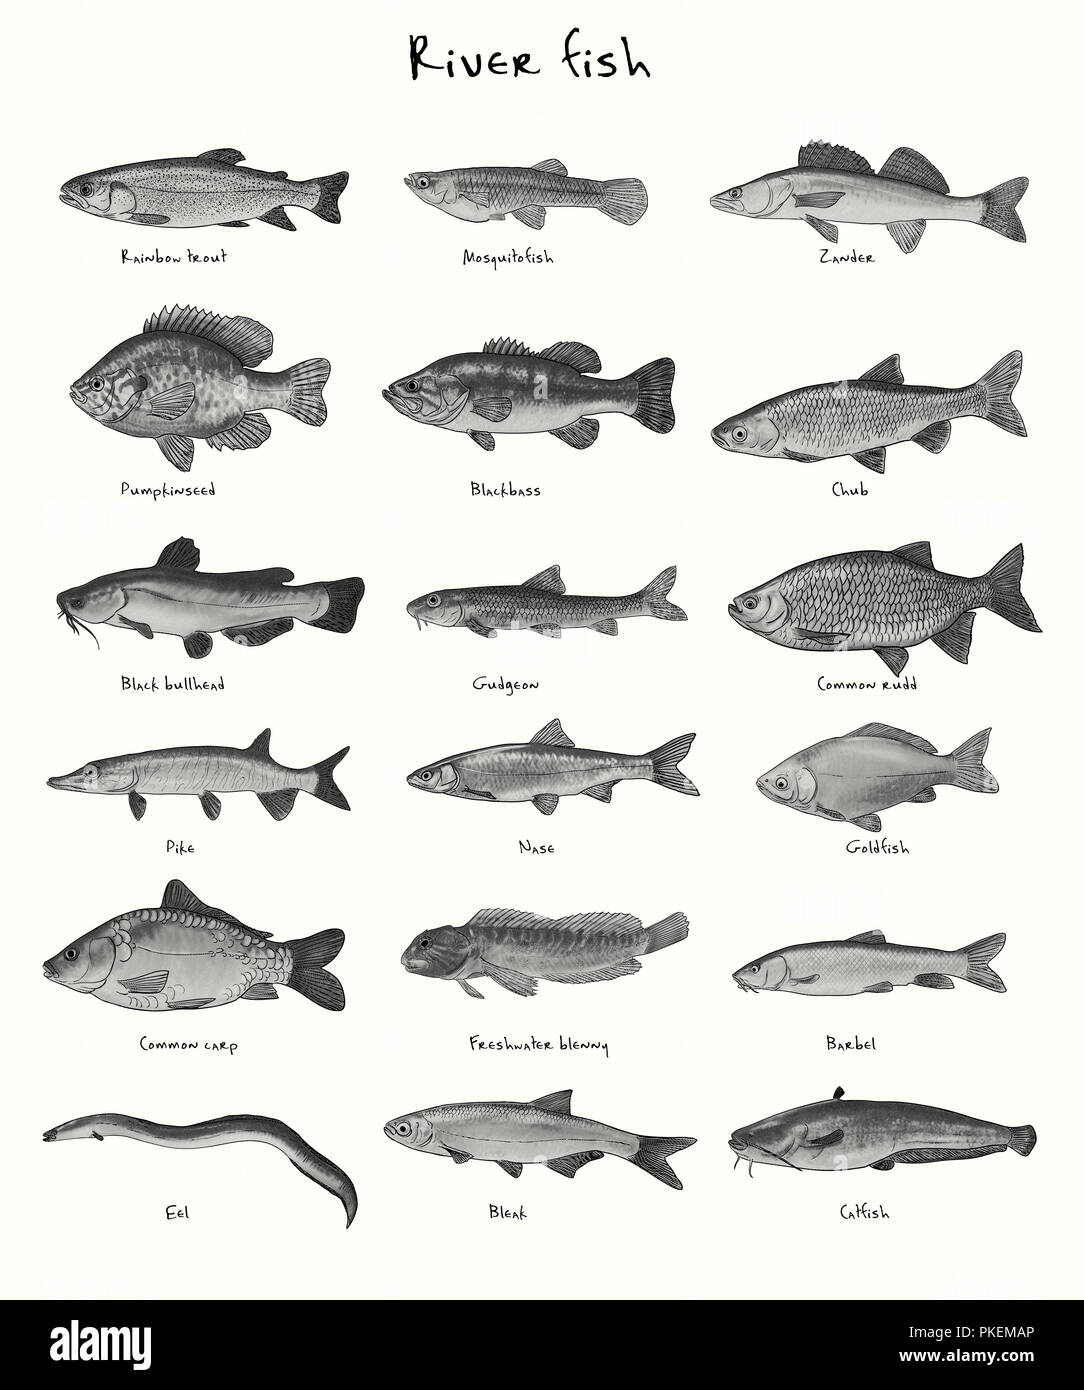 Digital illustration of river fish Stock Photo